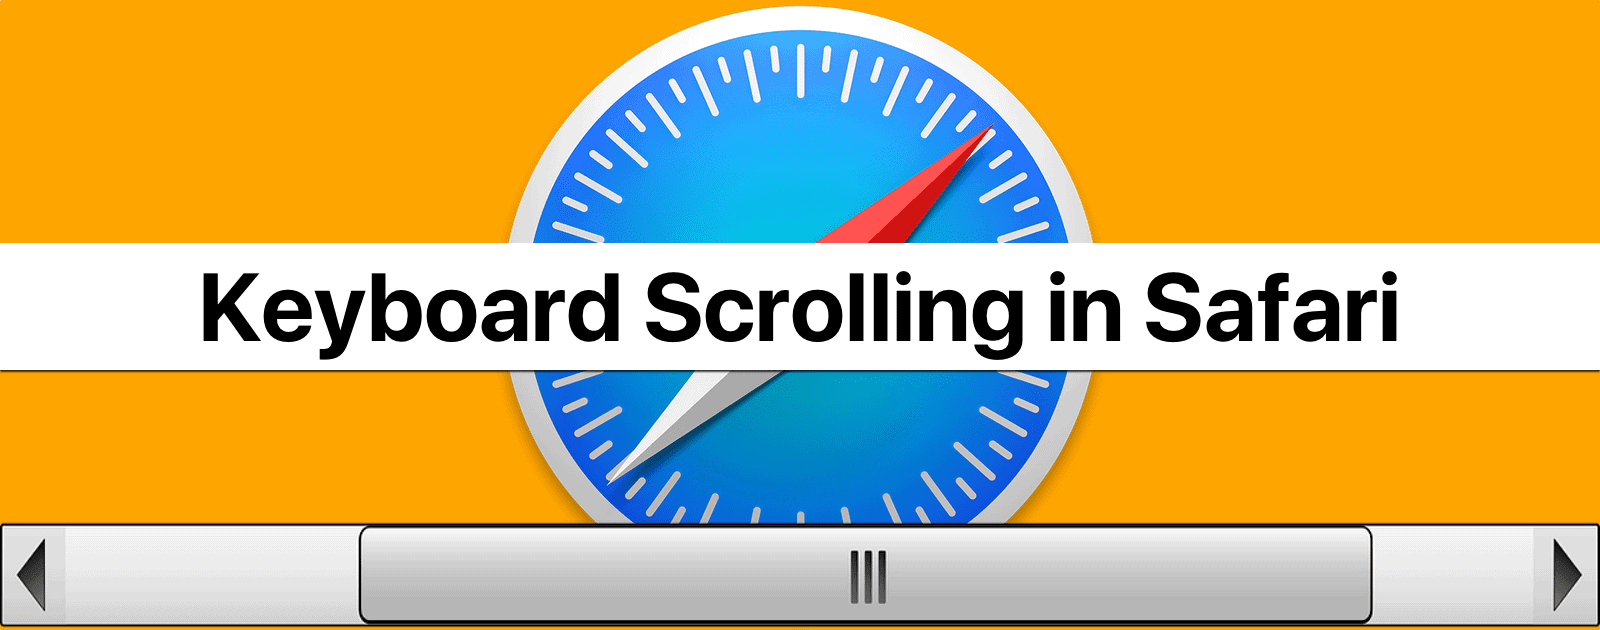 macOS: Scrolling in Safari With Keyboard Shortcuts